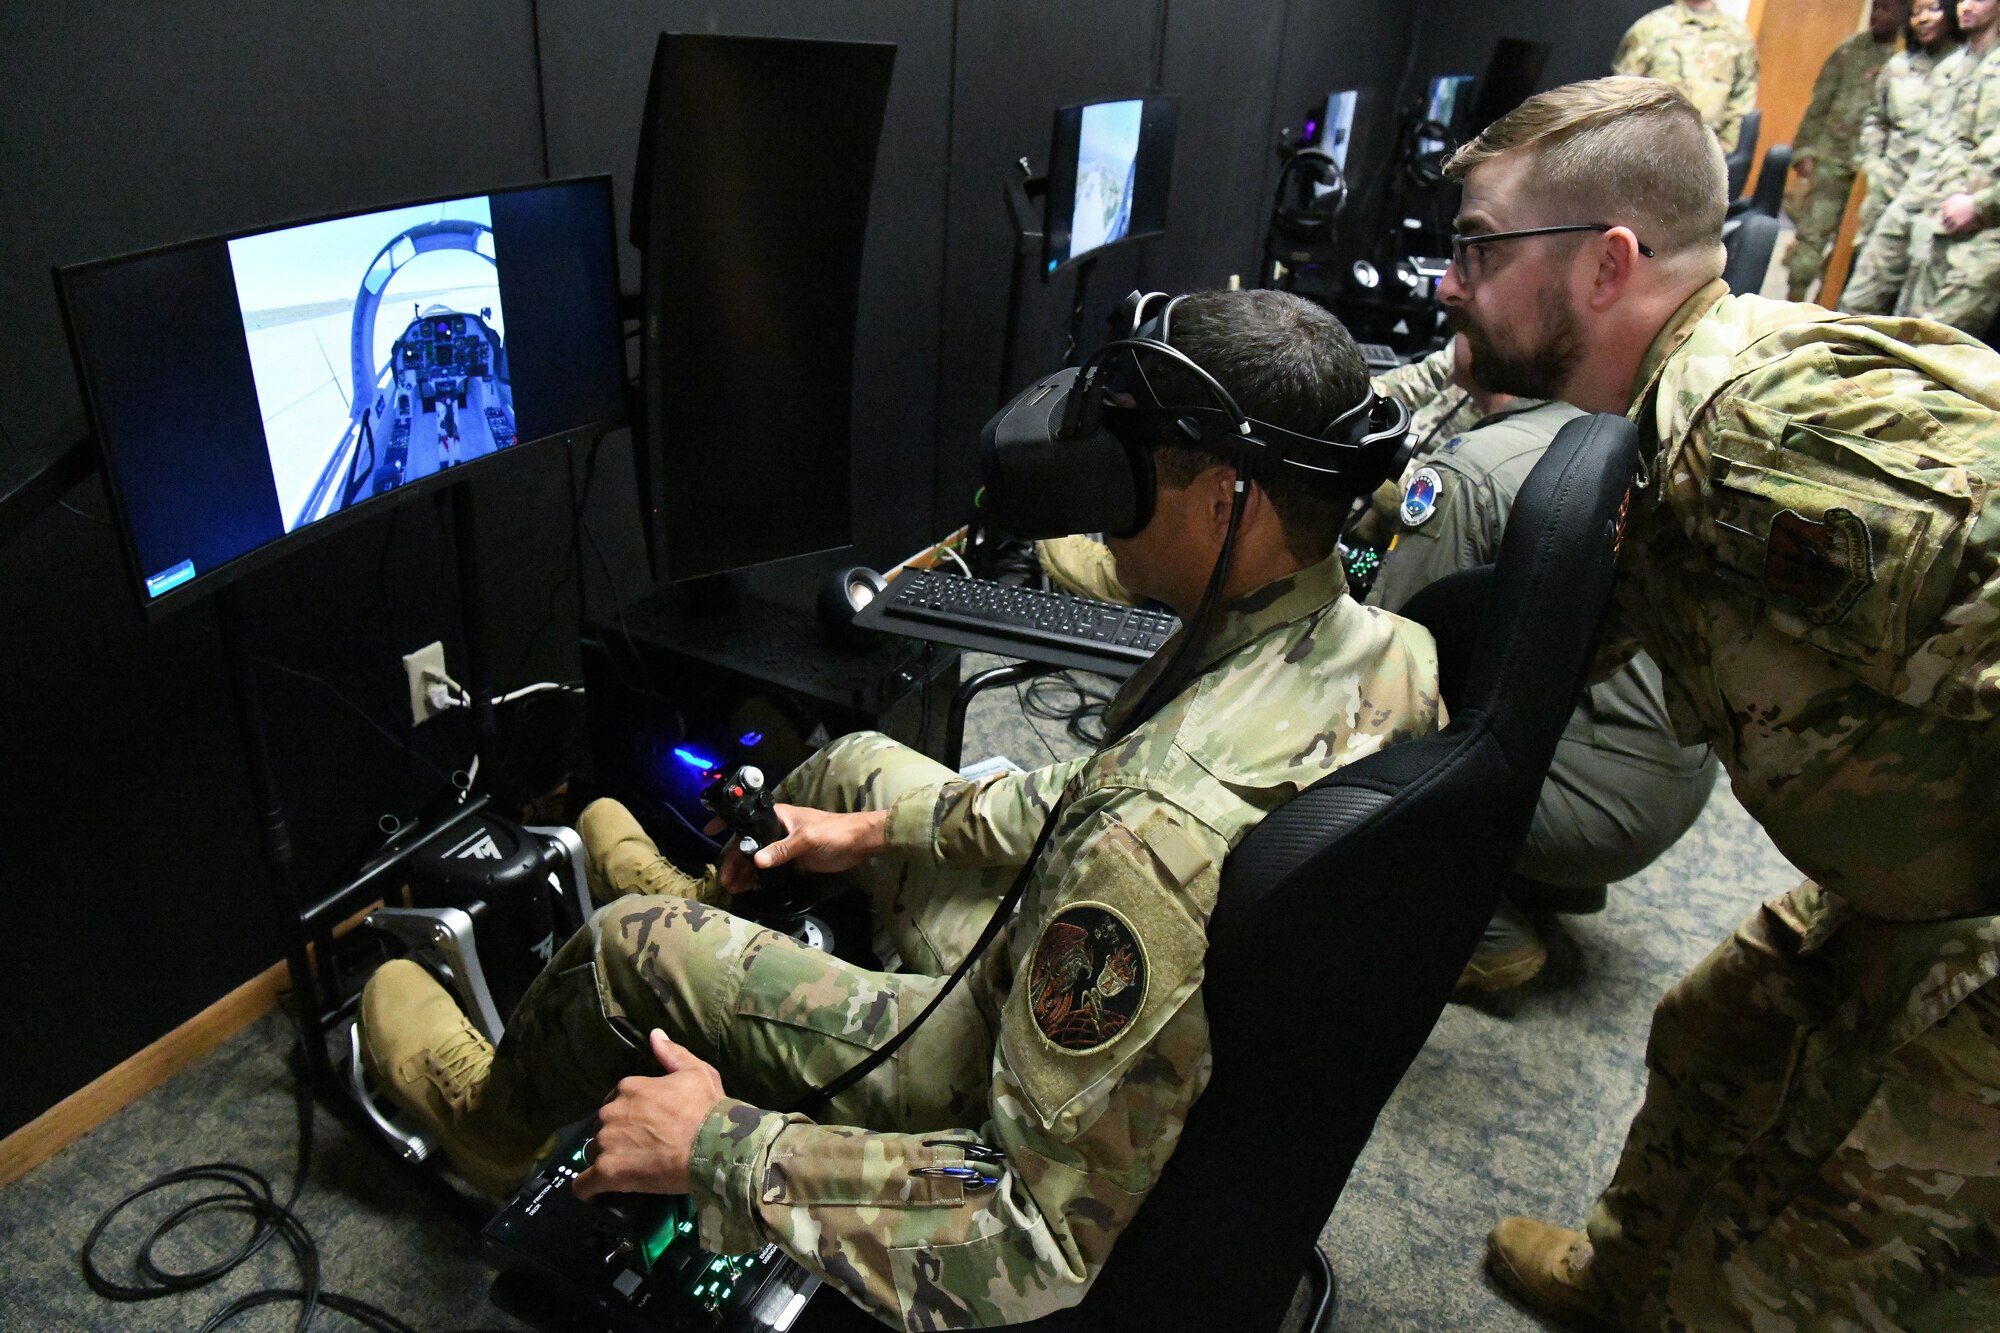 Man in military uniform flies aircraft simulator